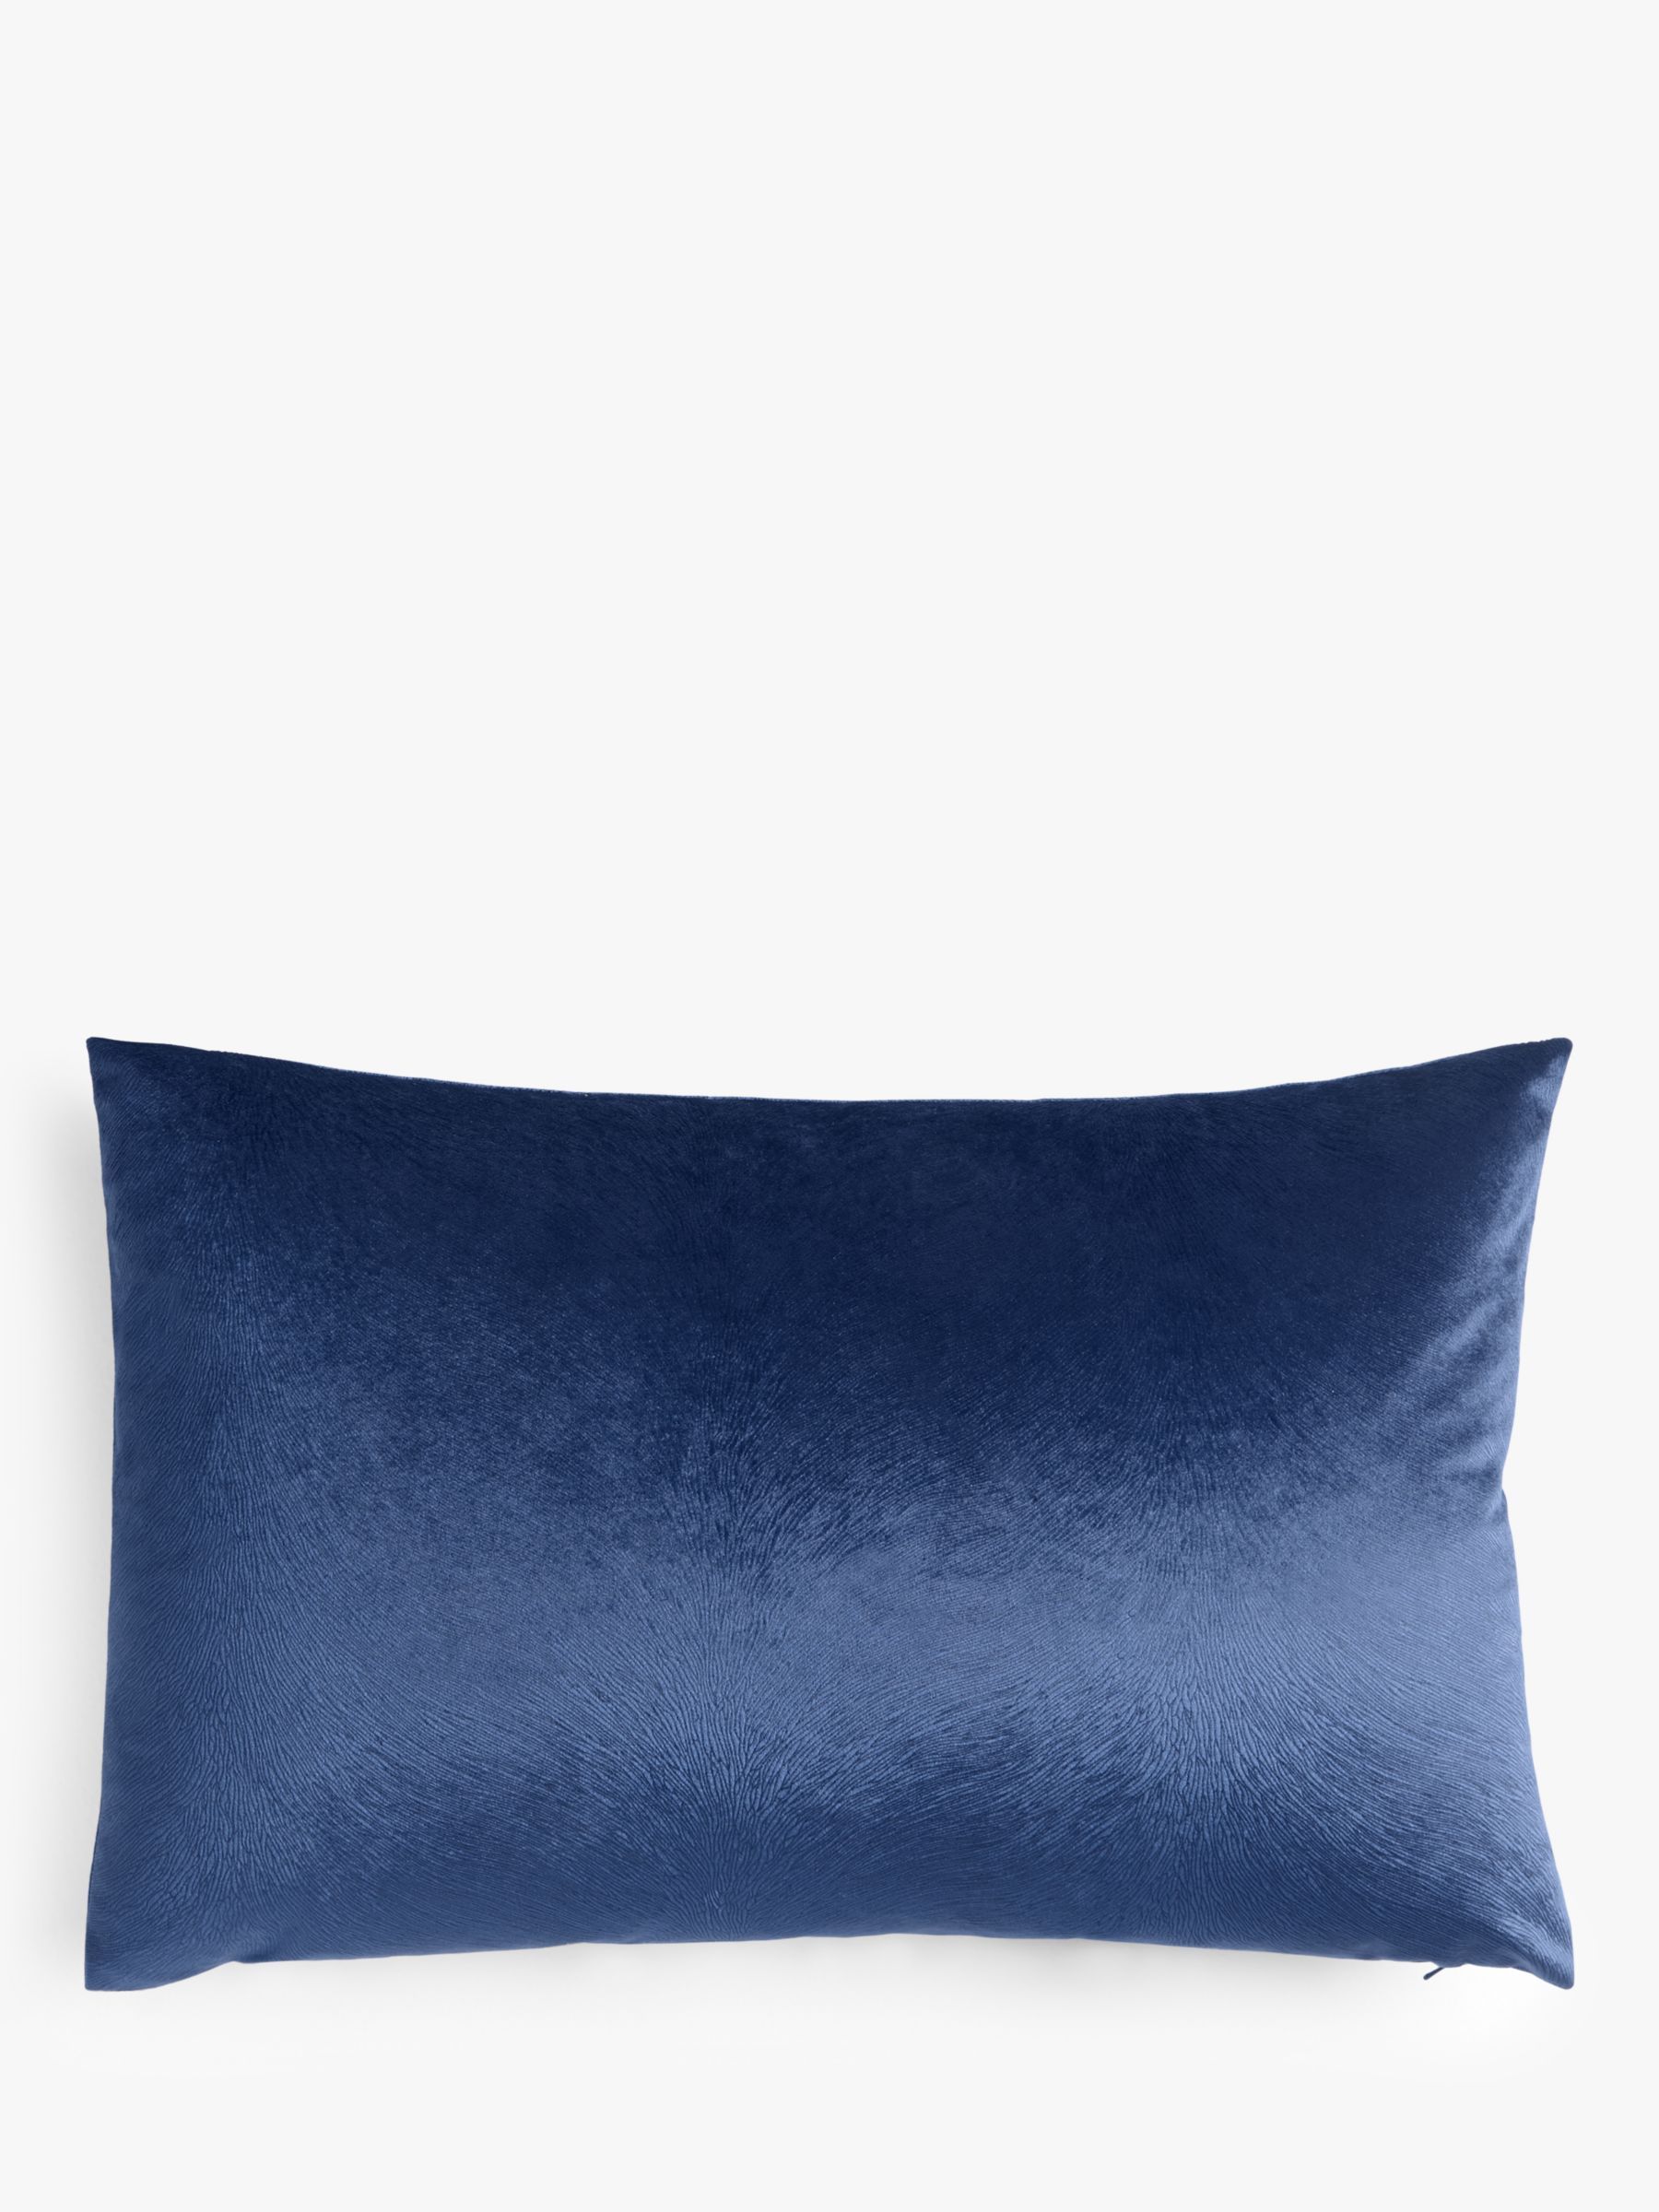 John Lewis & Partners Italian Cut Velvet Rectangular Cushion